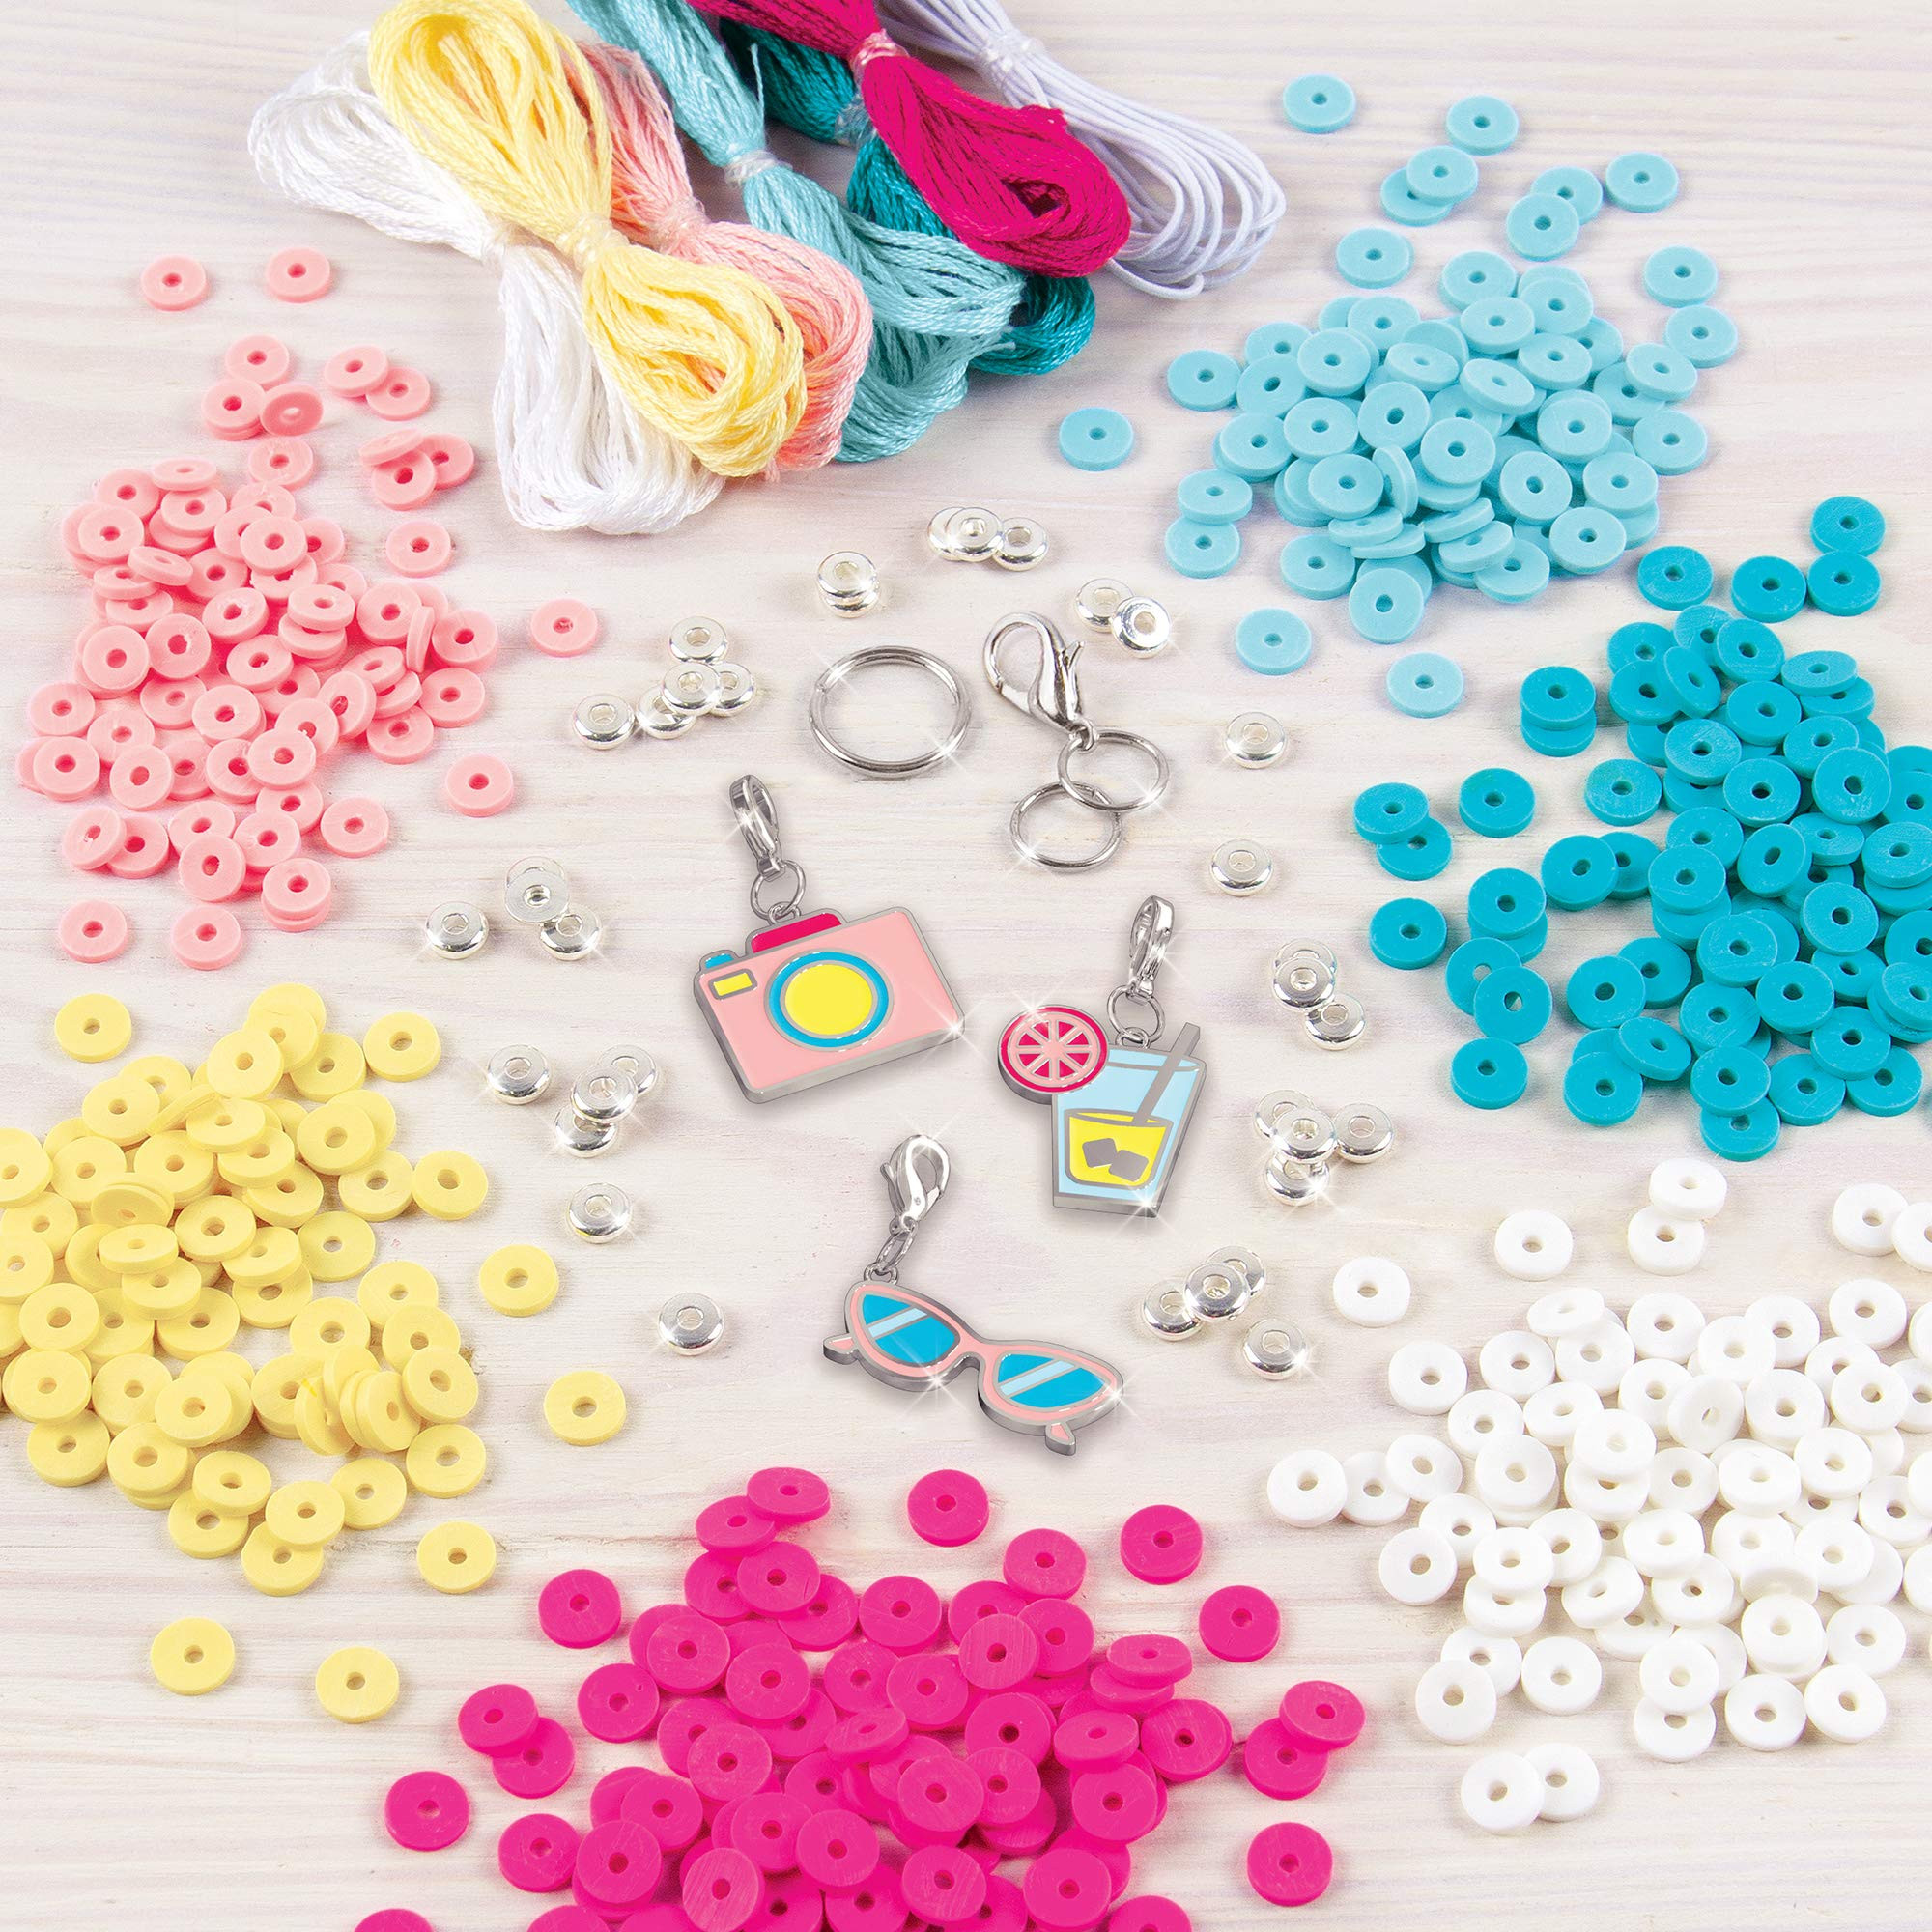 Xelparuc 85 Pieces Charm Bracelet Making Kit Including Jewelry Beads Snake  Chain DIY Craft Jewelry Gift Set for Kids Girls Teens - Walmart.com